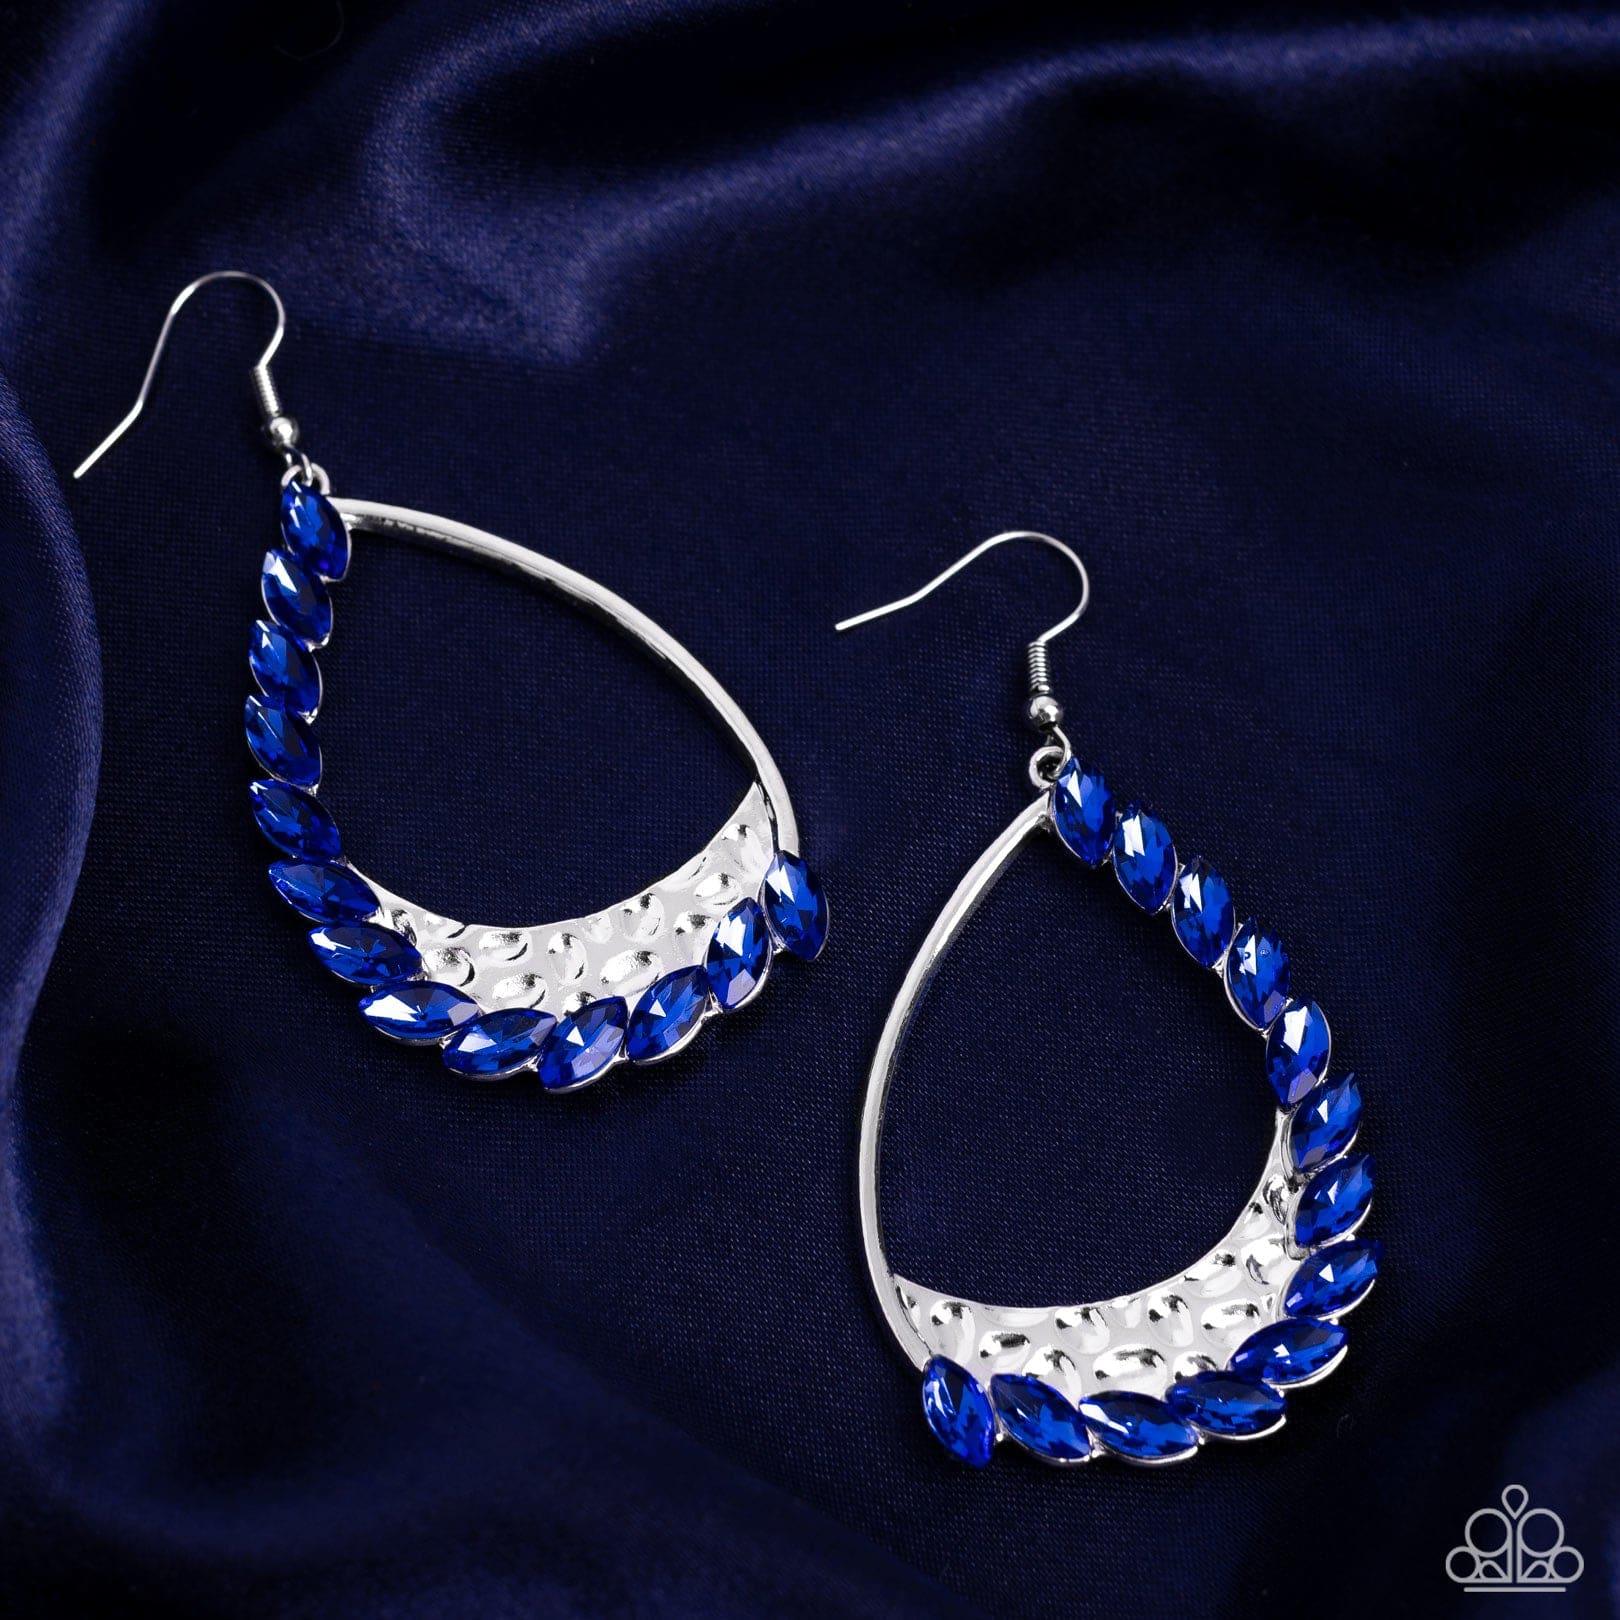 Paparazzi Accessories - Looking Sharp - Blue Earrings - Bling by JessieK